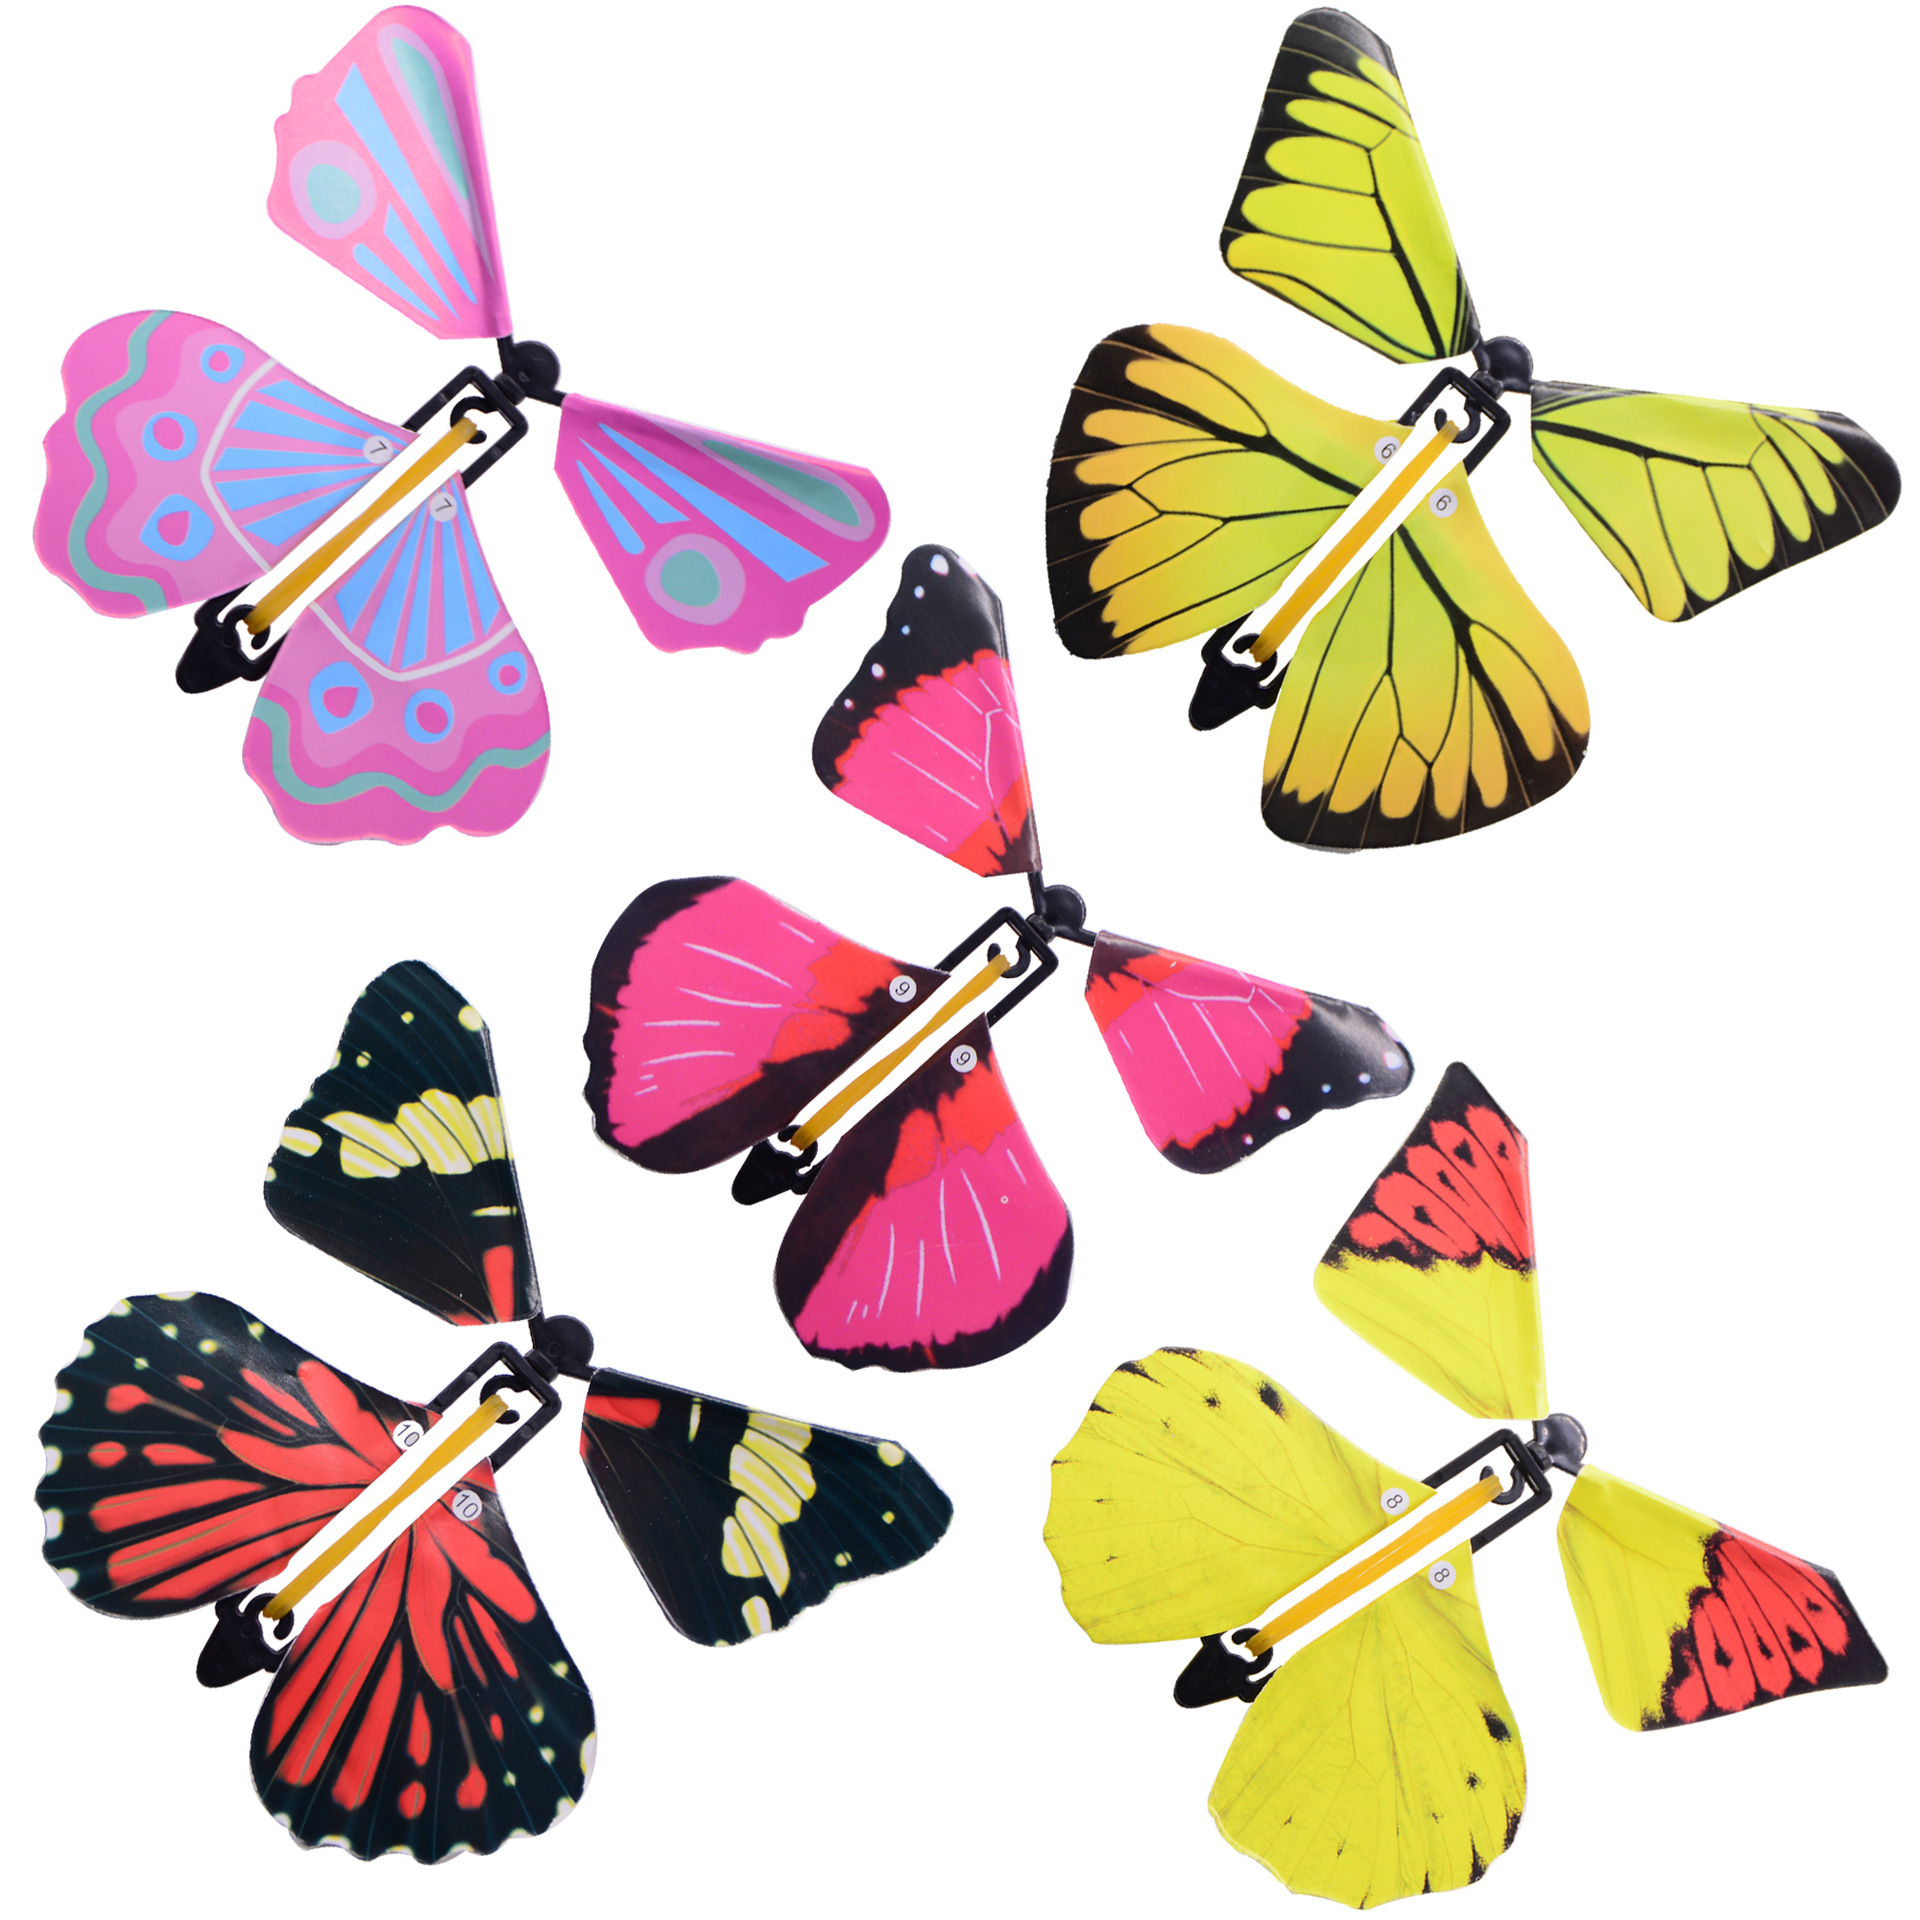 colour Magic butterfly butterfly Magic butterfly Strange new Magic prop Toys Manufactor wholesale